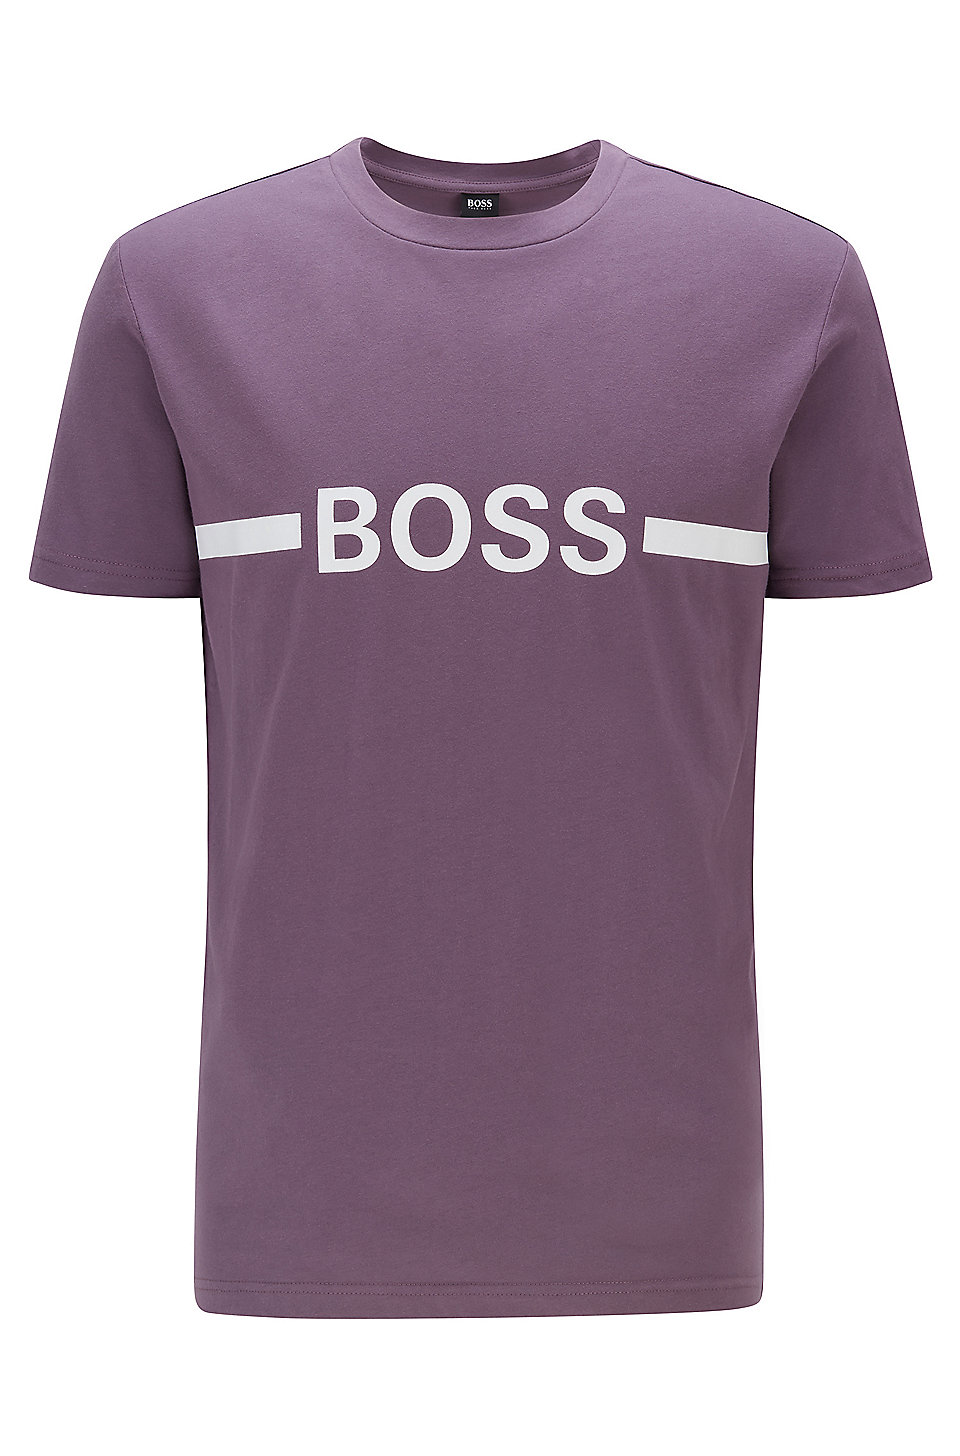 Hugo Boss Tee Cotton Round Neck Turquoise T-Shirt 